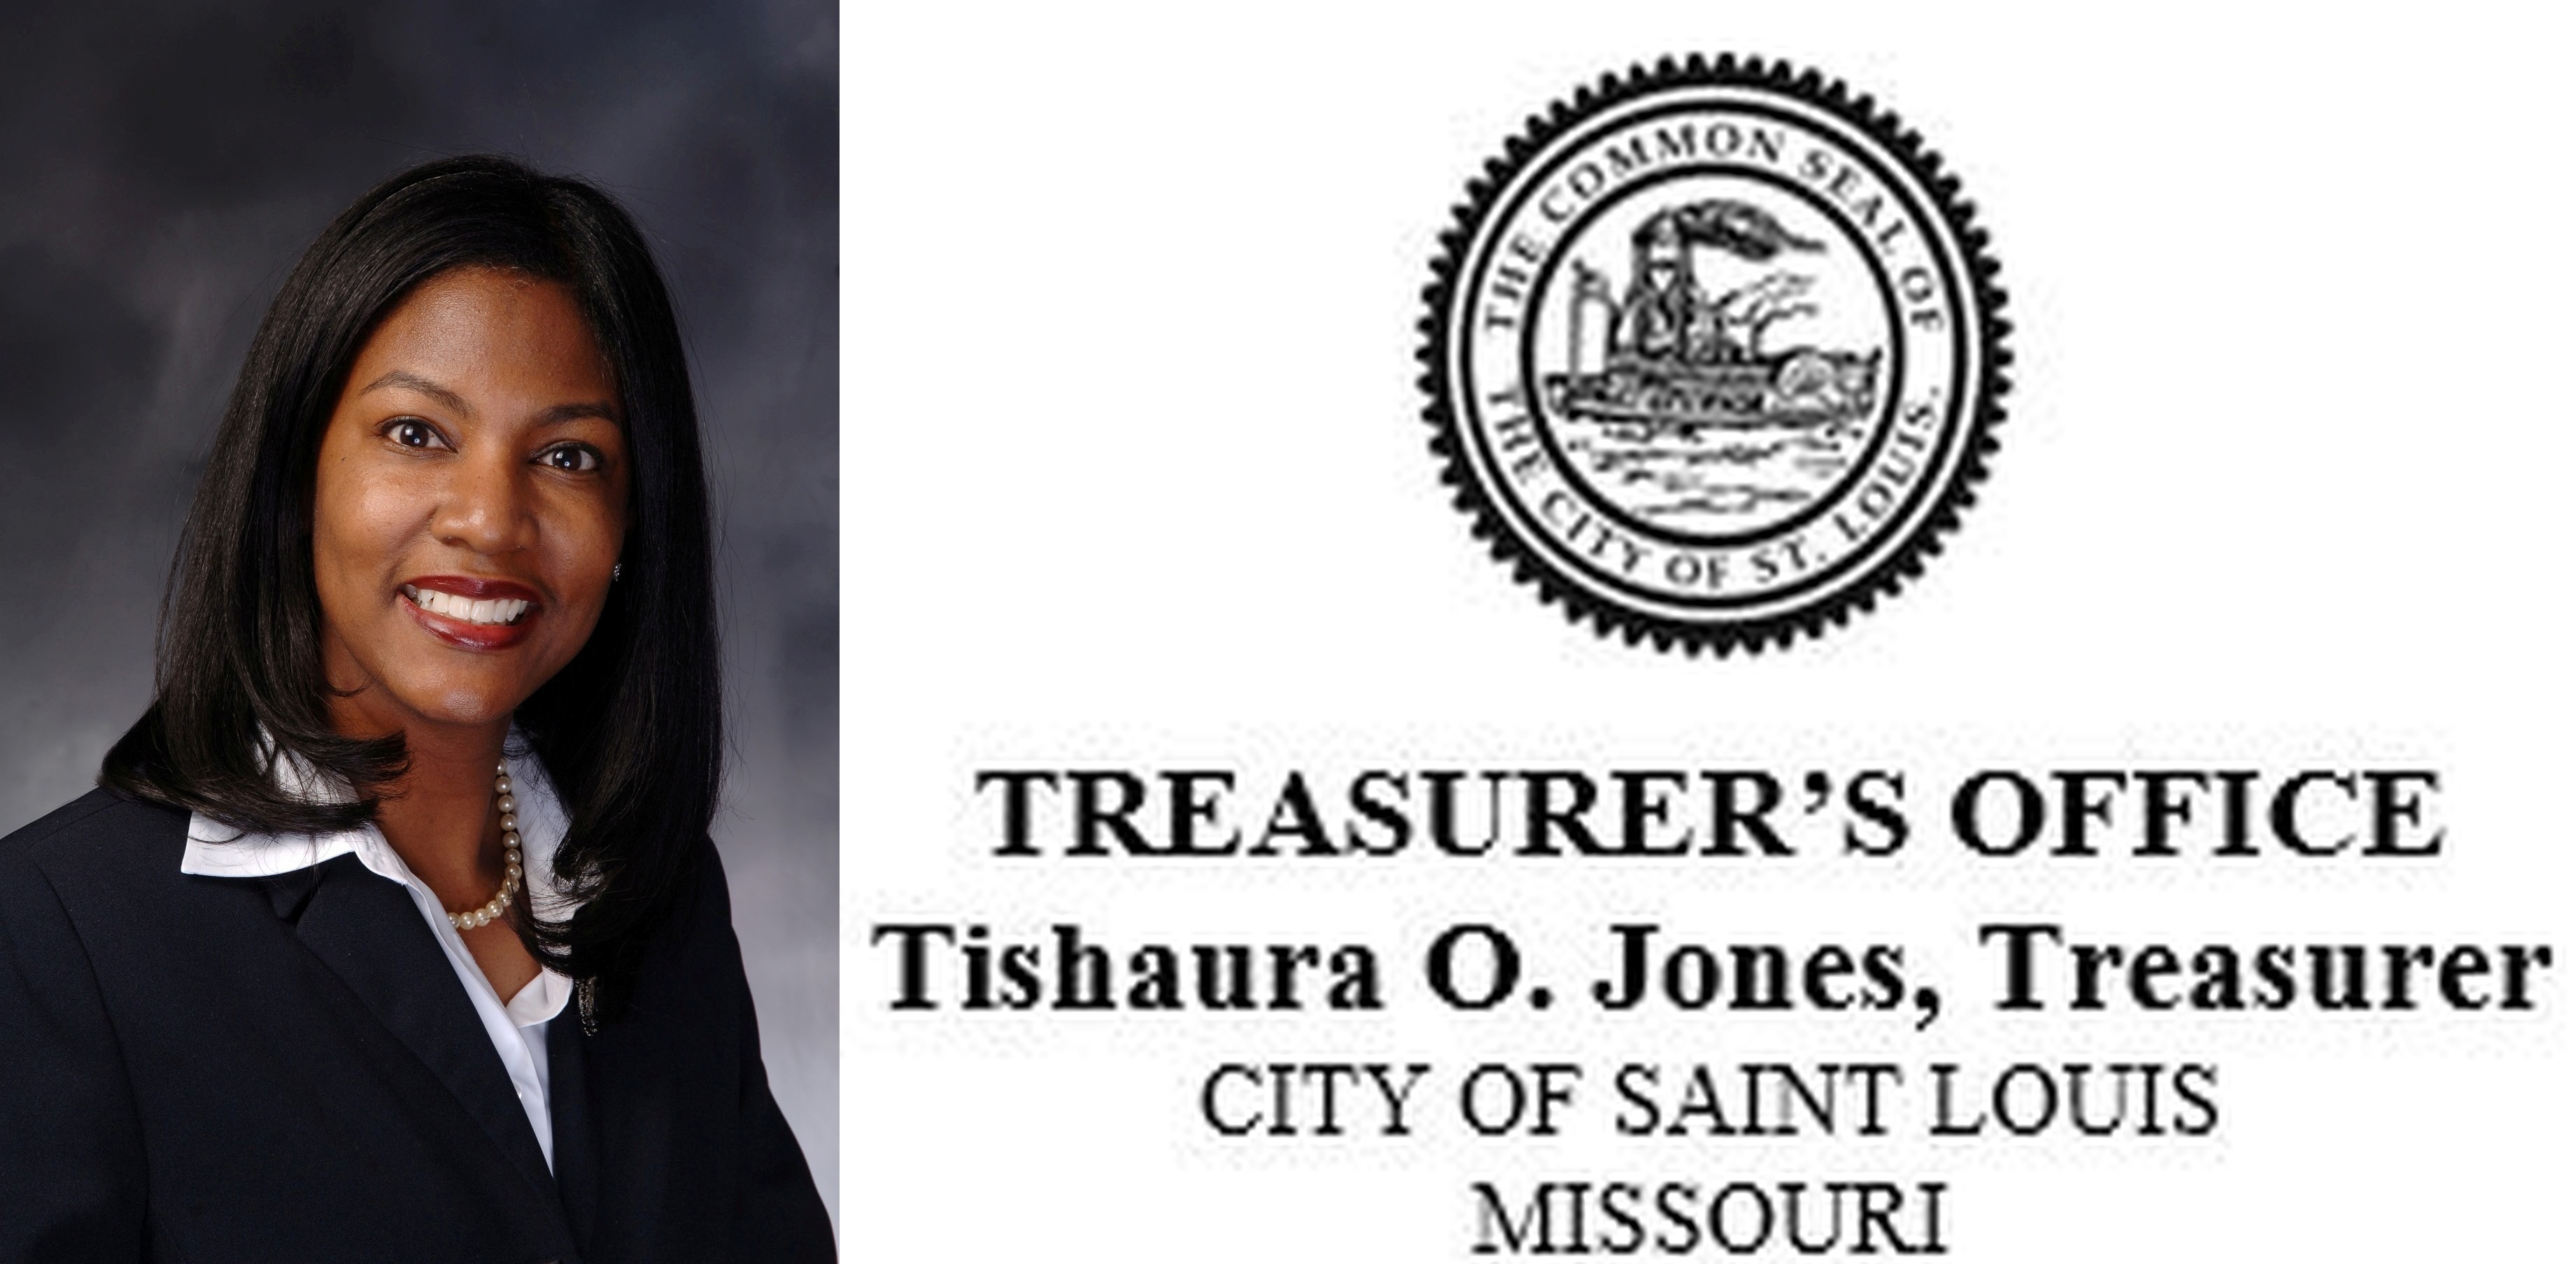 Photo and Logo of Treasurer